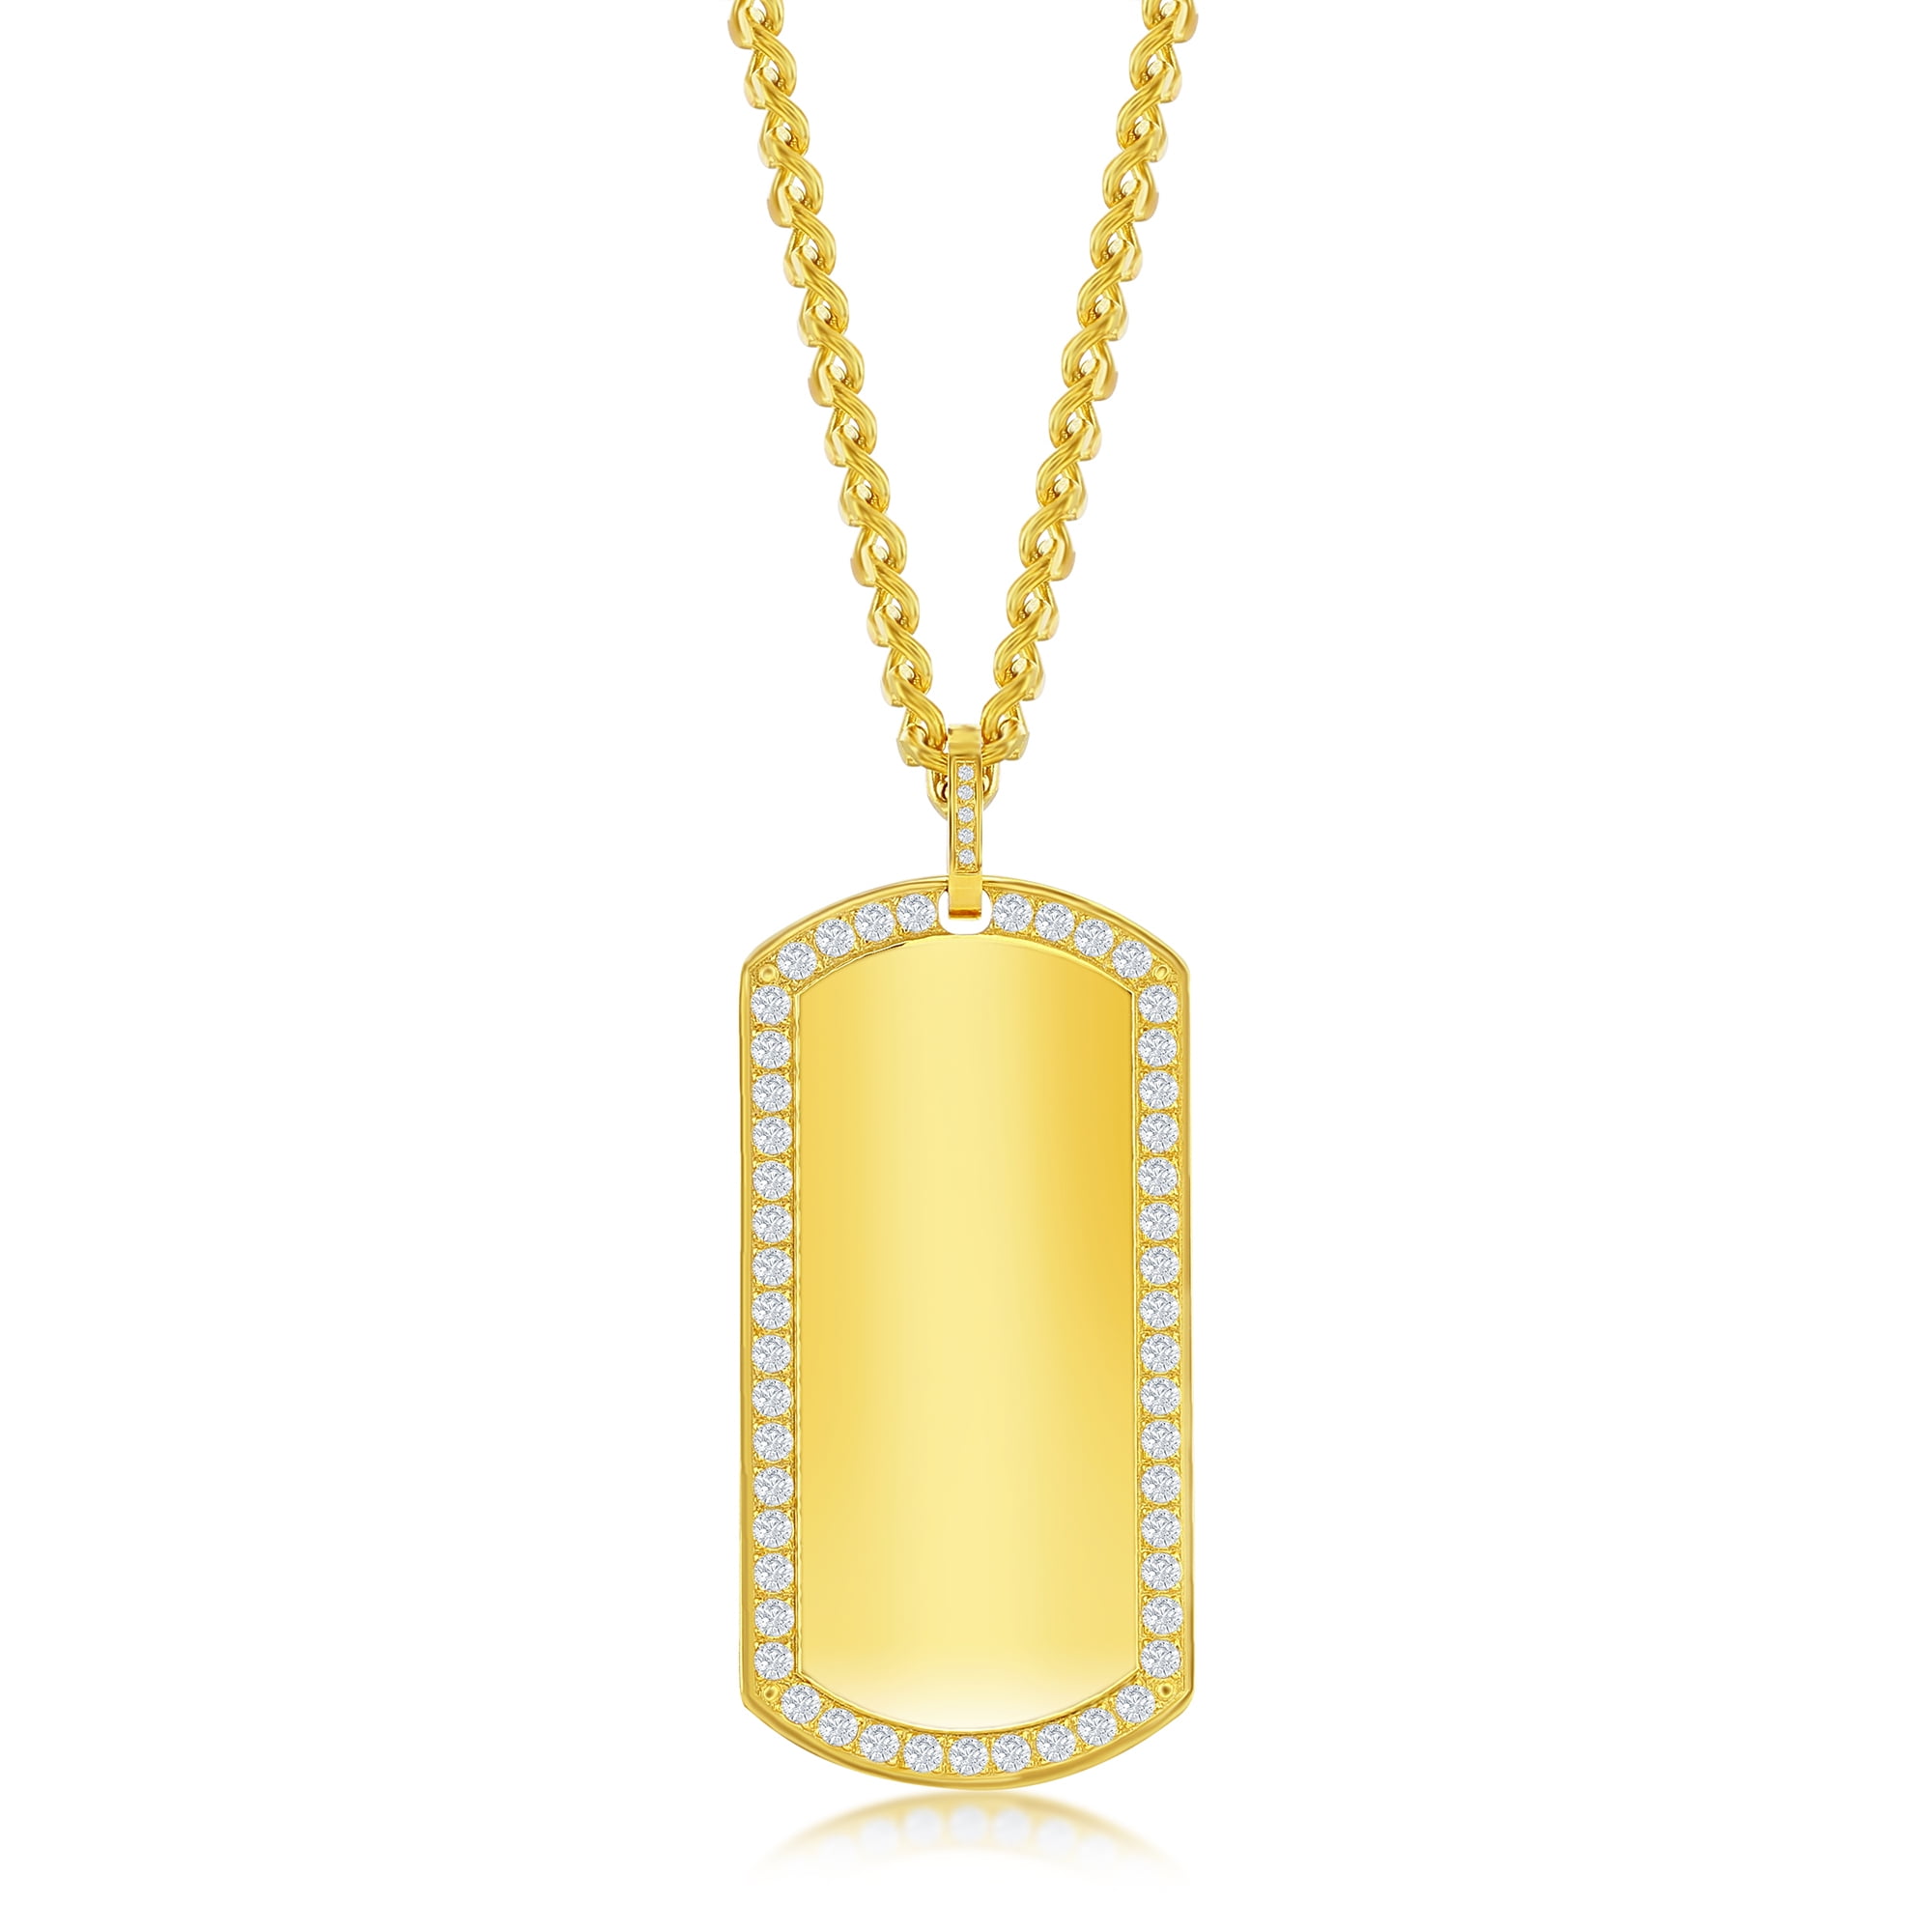 Men's 24K Gold Titanium Diamond Dog Tag Pendant Necklace